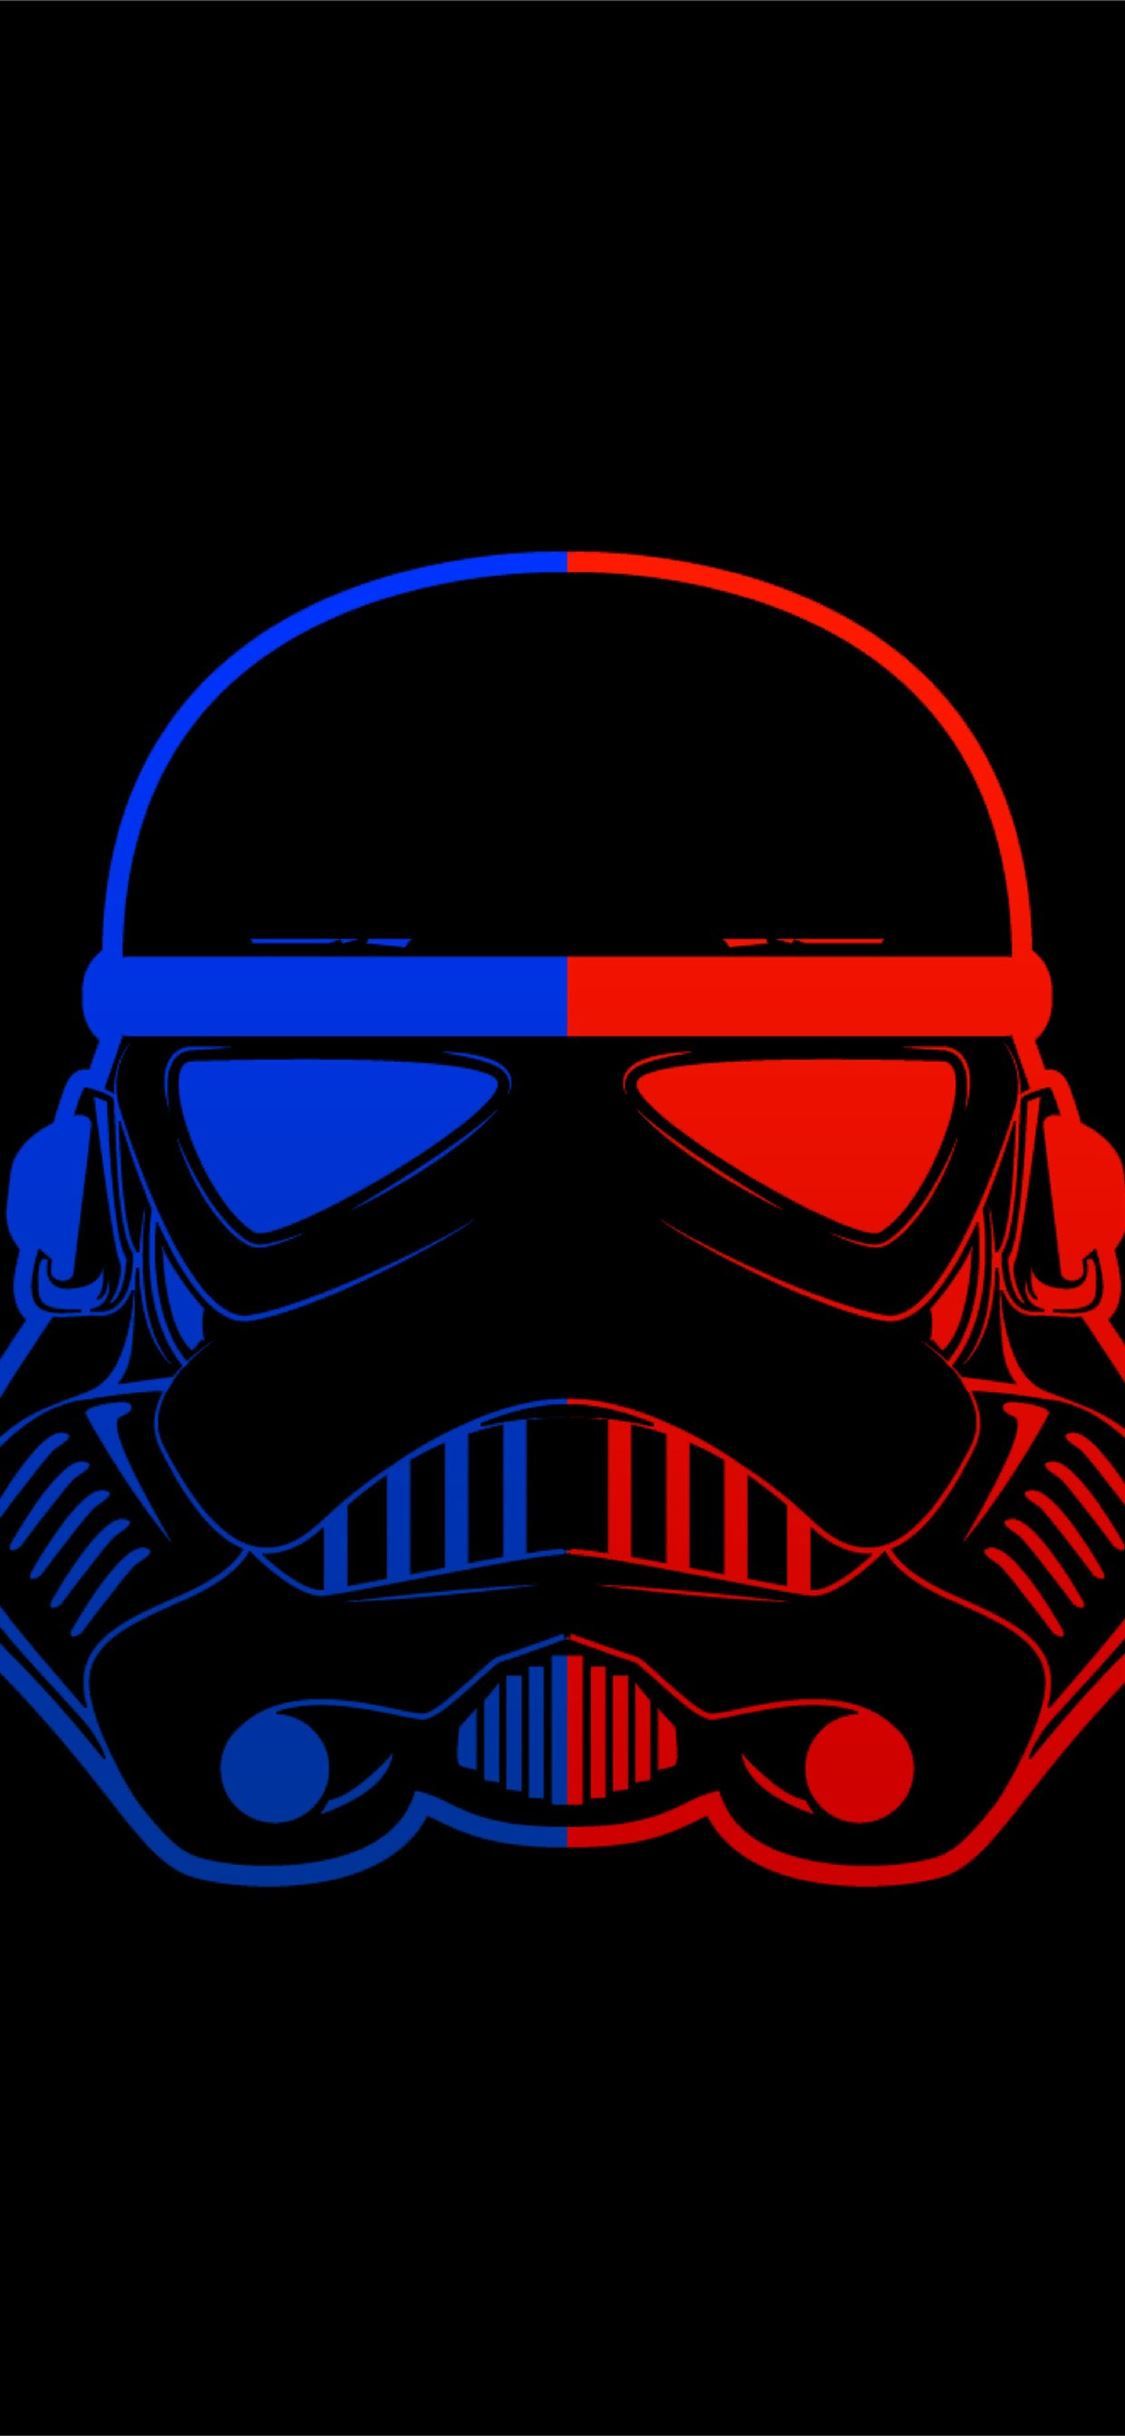 Stormtrooper iPhone X HD Wallpaper .ilikewallpaper.net